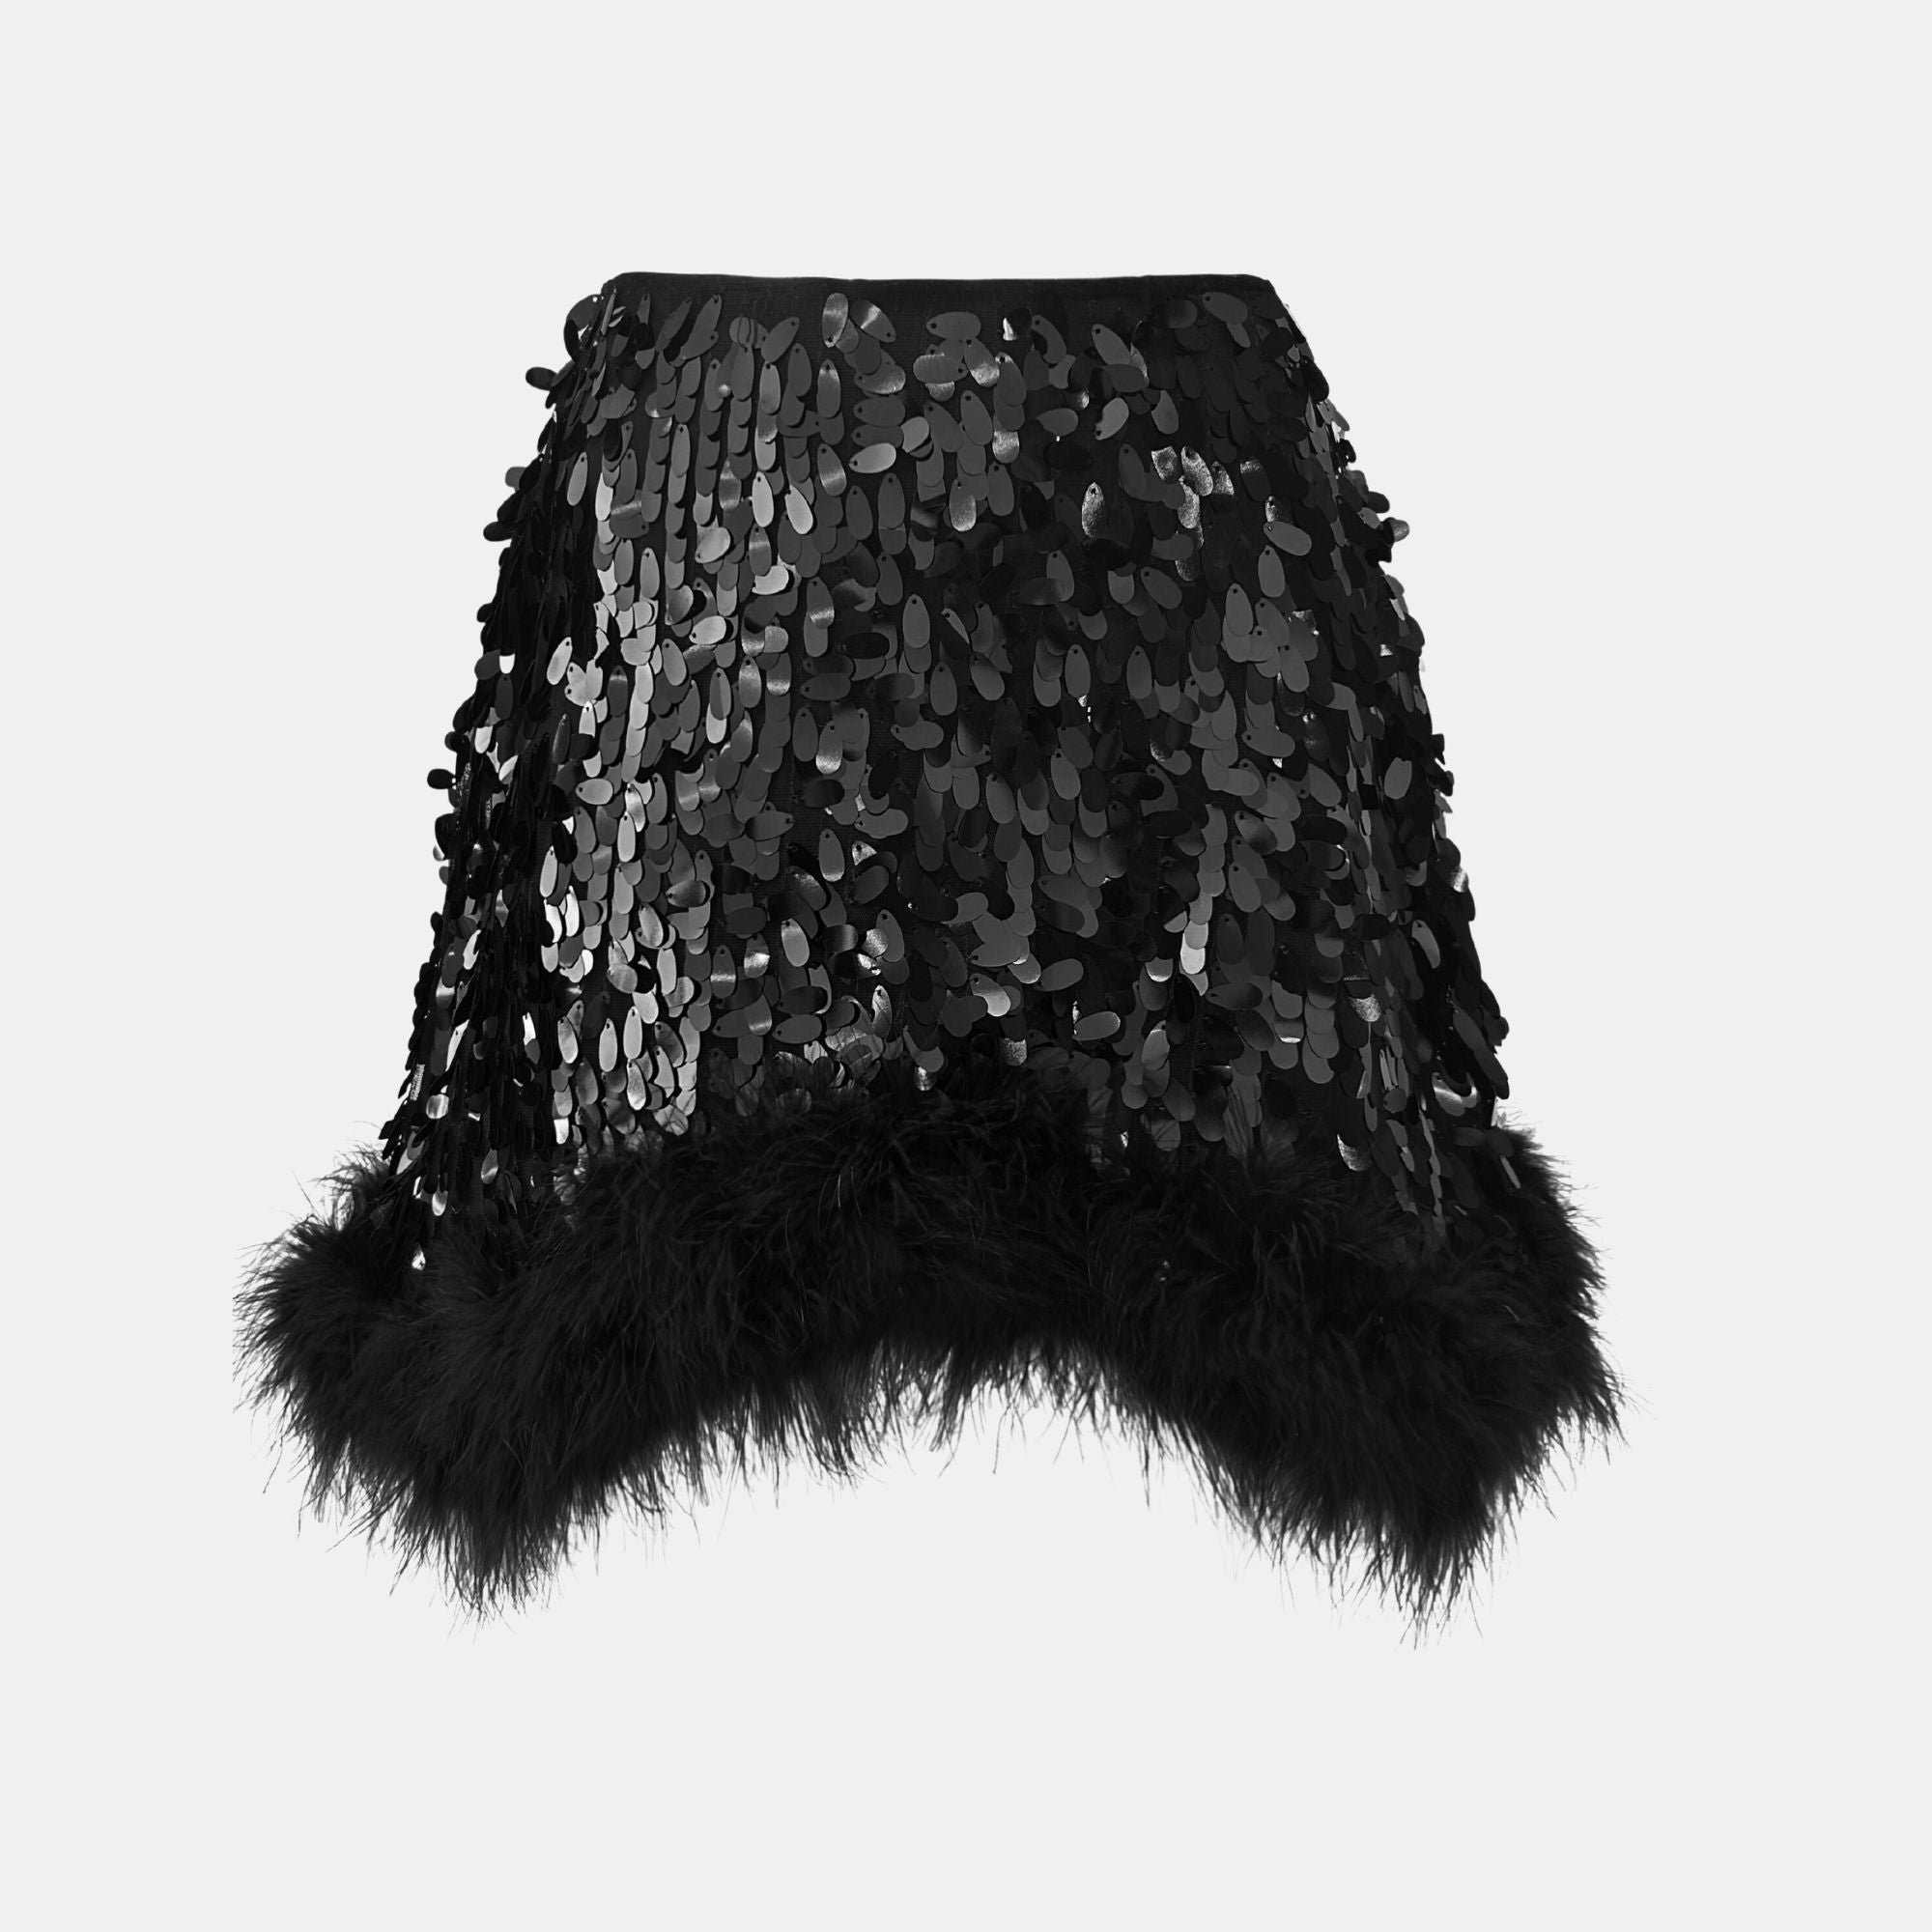 BHLDN Anthropologie Black Frolicking Feather Skirt Retail $850 NWOT | eBay